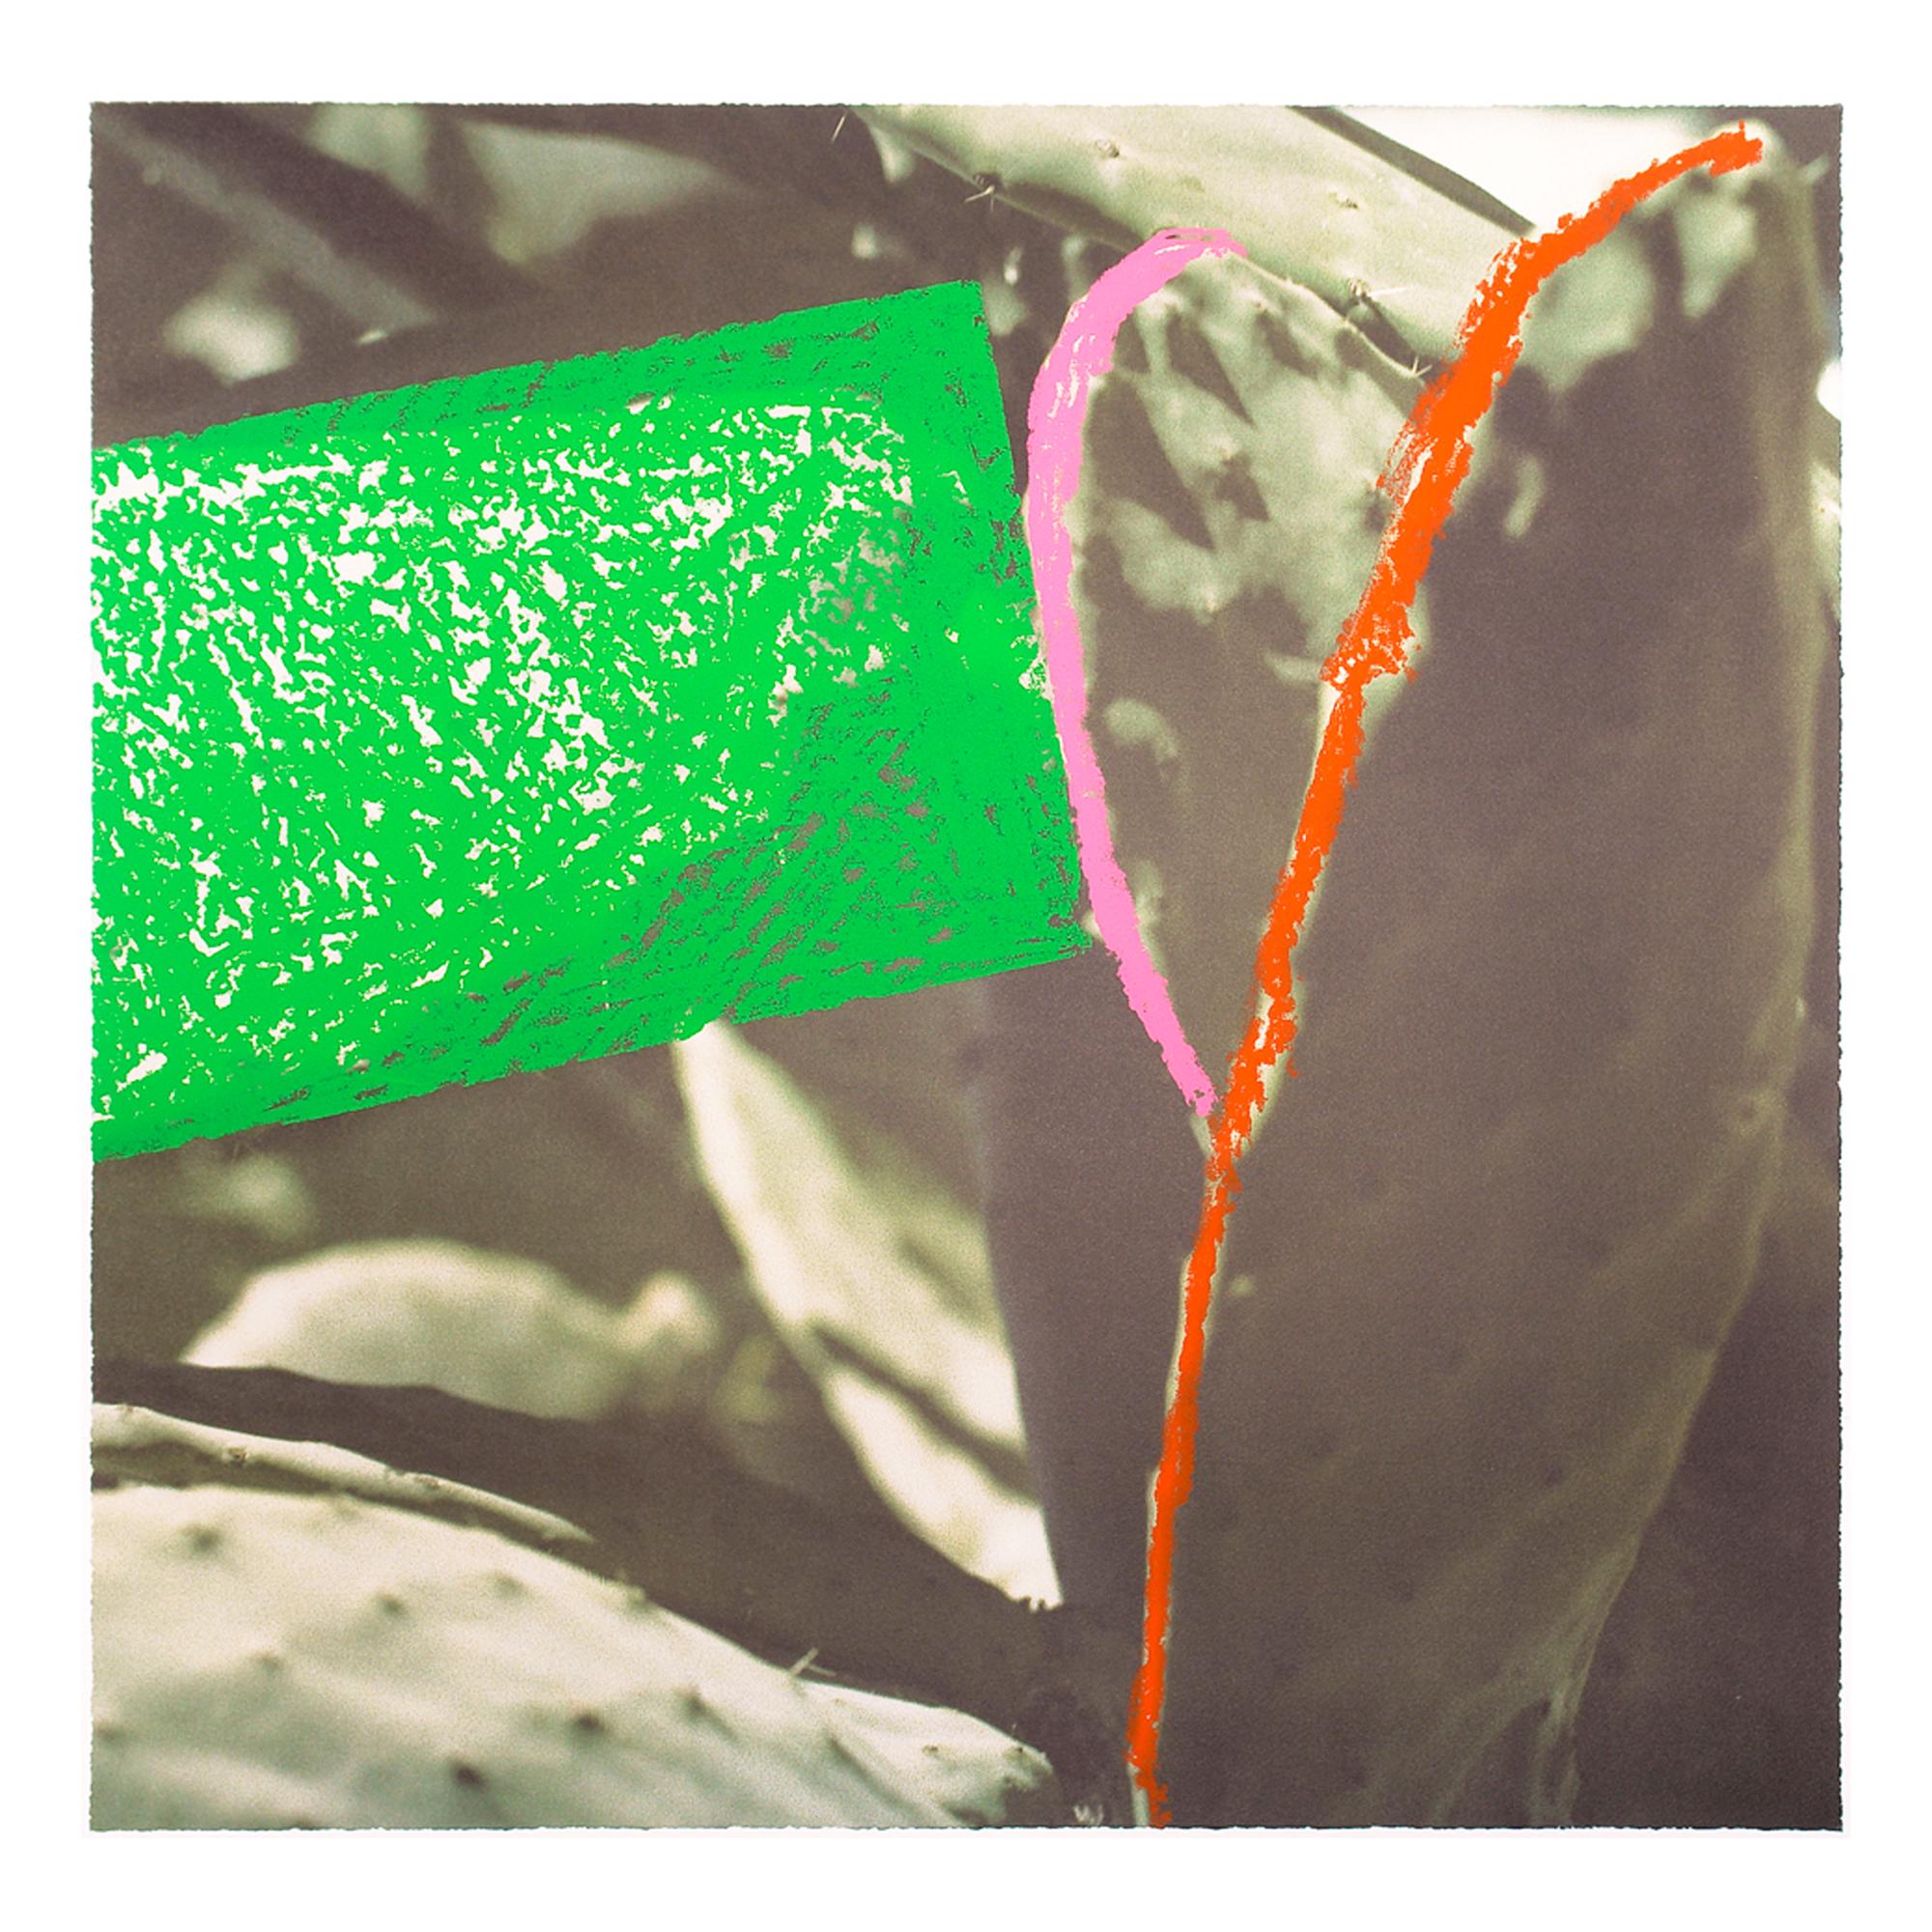 John Baldessari Abstract Print - Cactus, from "Third Street, Santa Monica", Contemporary Art, Concept Art